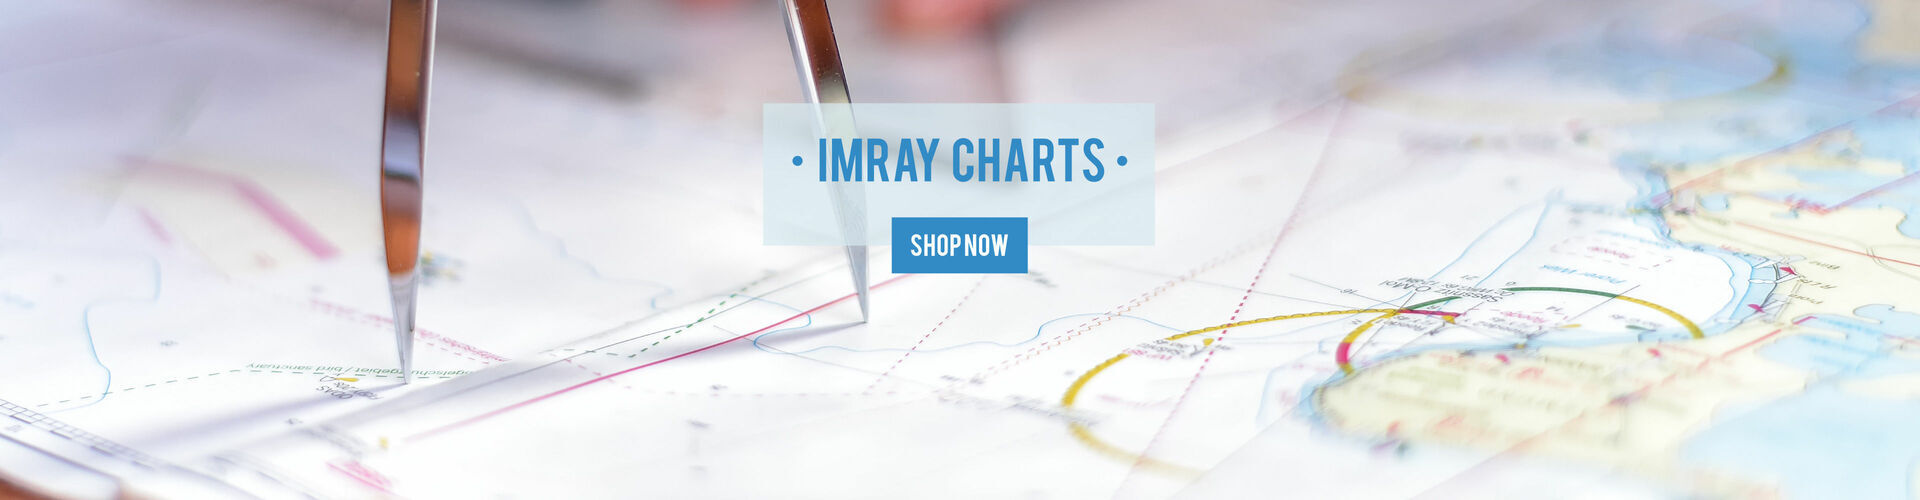 Imray Charts